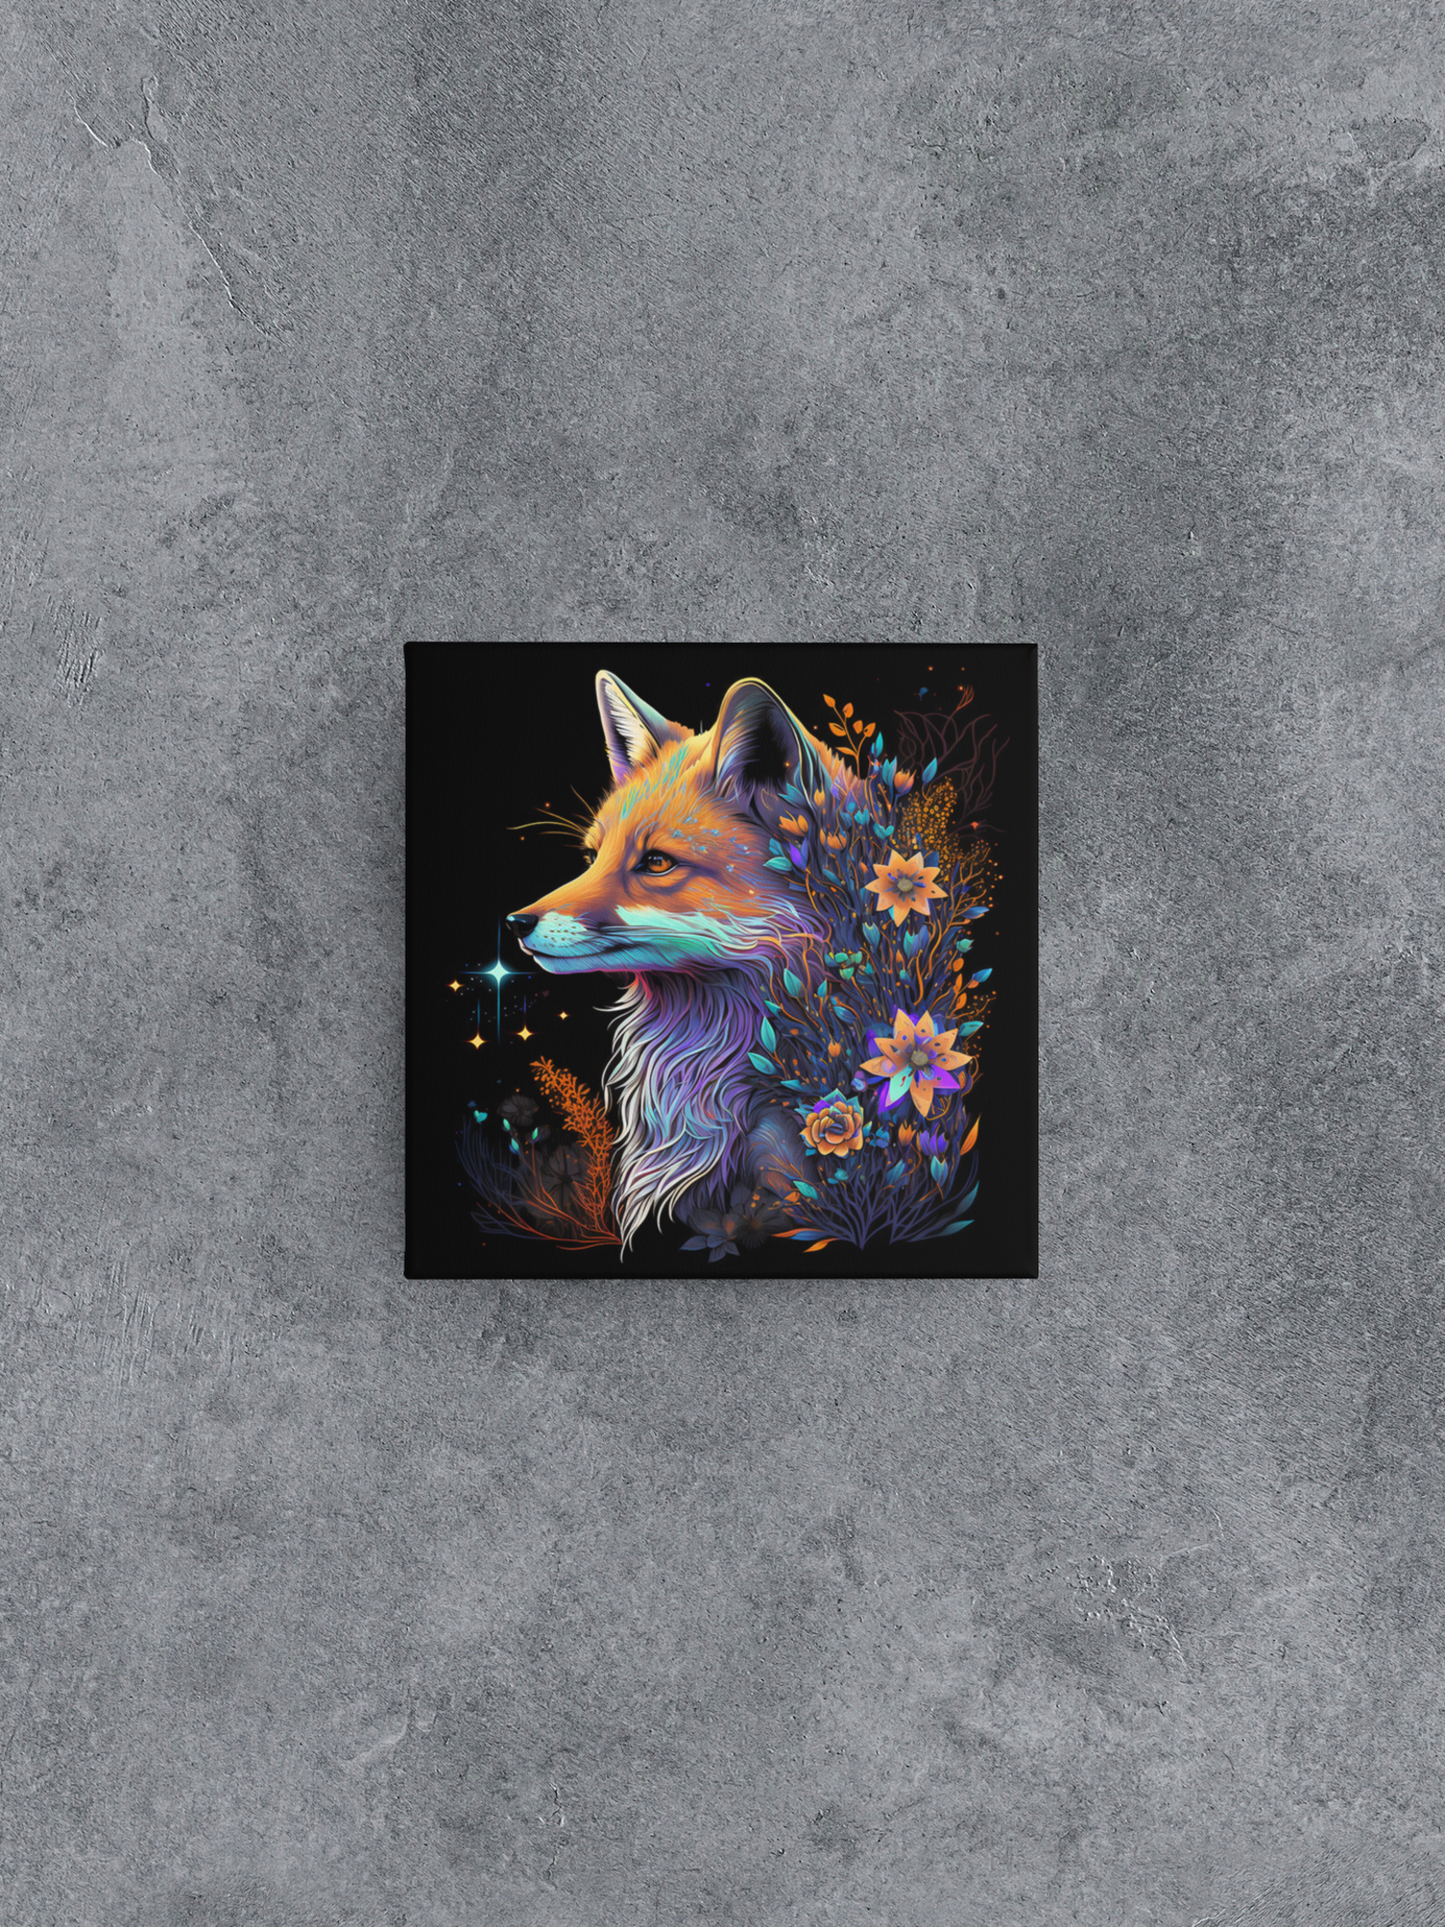 Black Light Fox with Flowers Canvas Wall Art, Neon Fox with Flowers Canvas Painting, Majestic Fox Painting, Colorful Flowered Fox Canvas